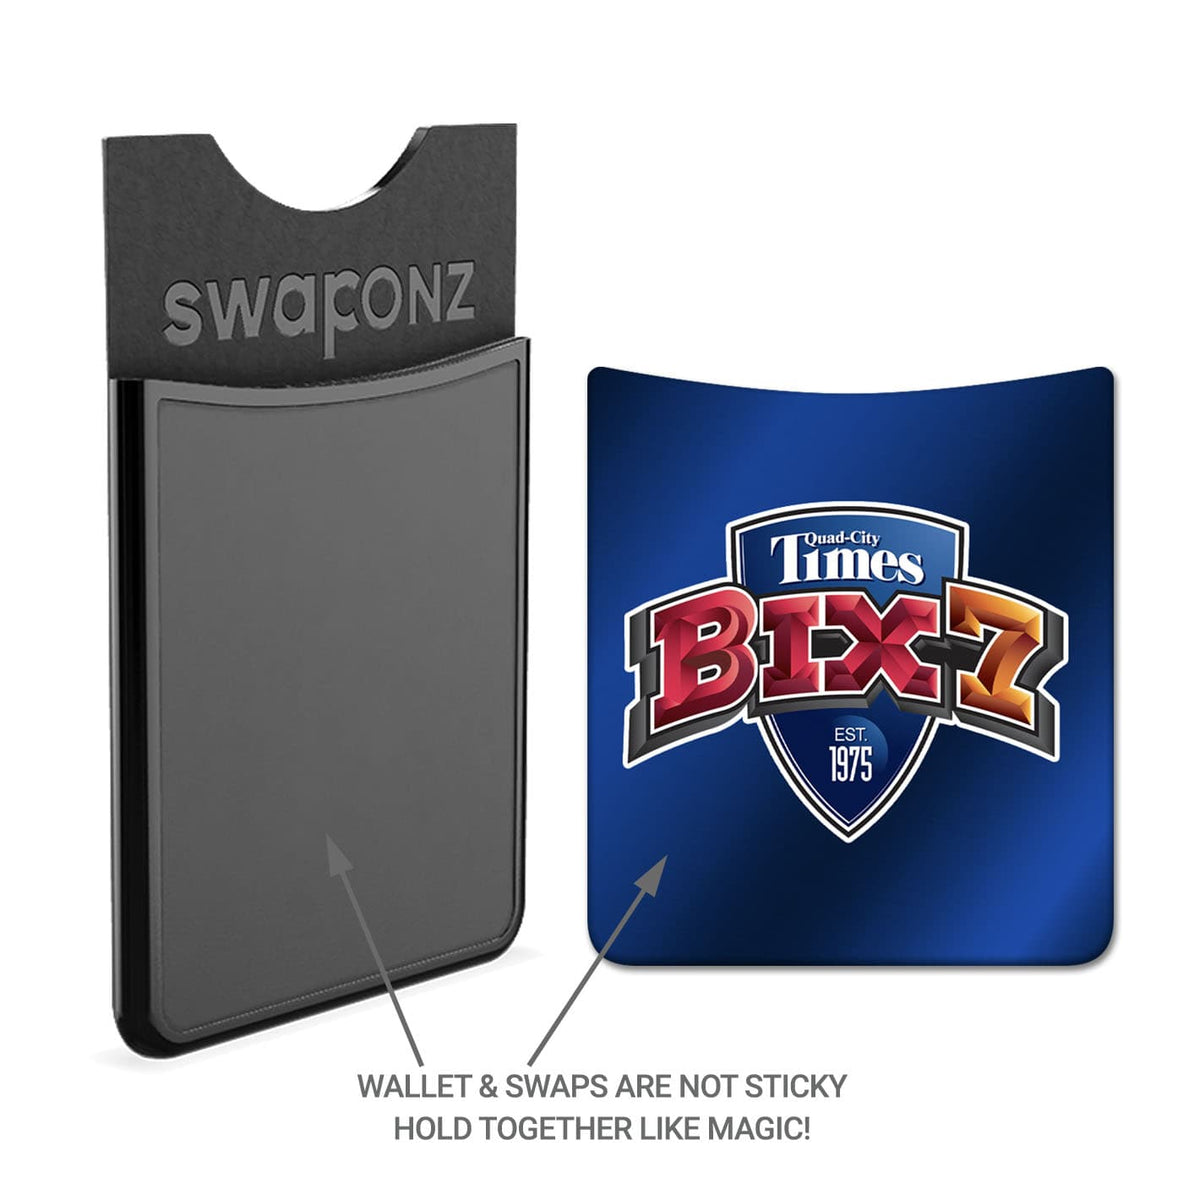 Phone Wallet Set - BIX 7 - 1